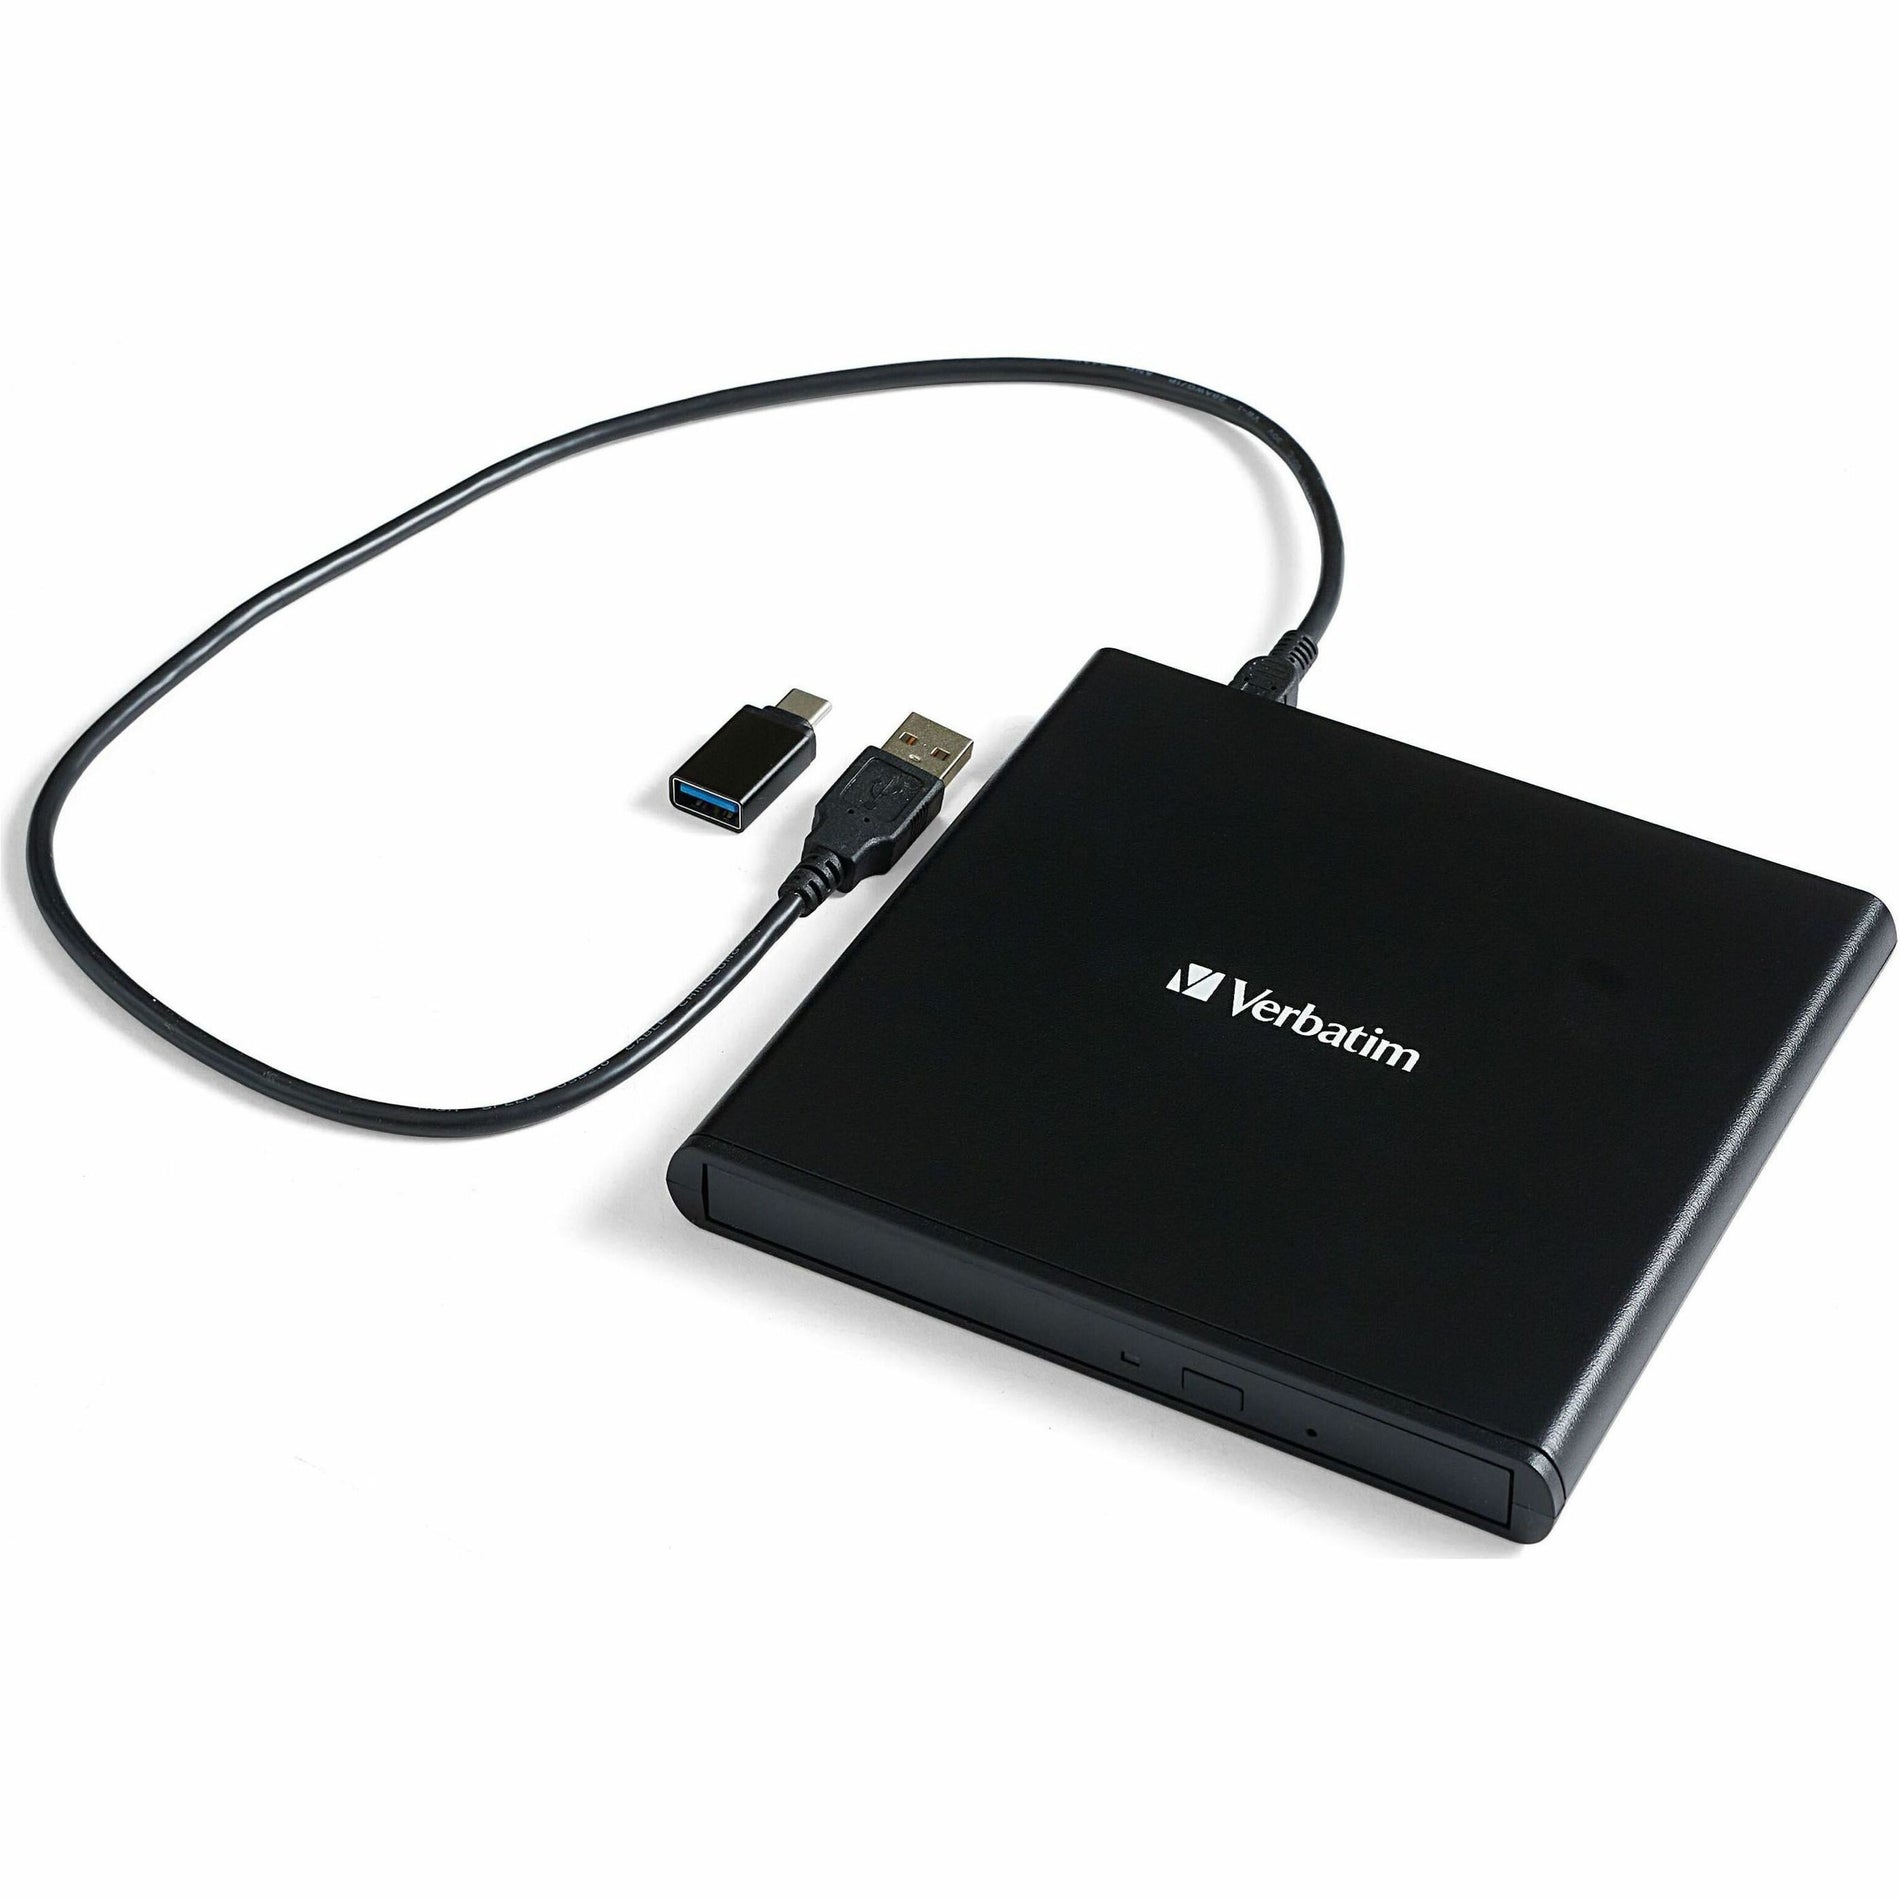 Verbatim 98938 External Slimline CD/DVD Writer, Portable USB 2.0 DVD-Writer